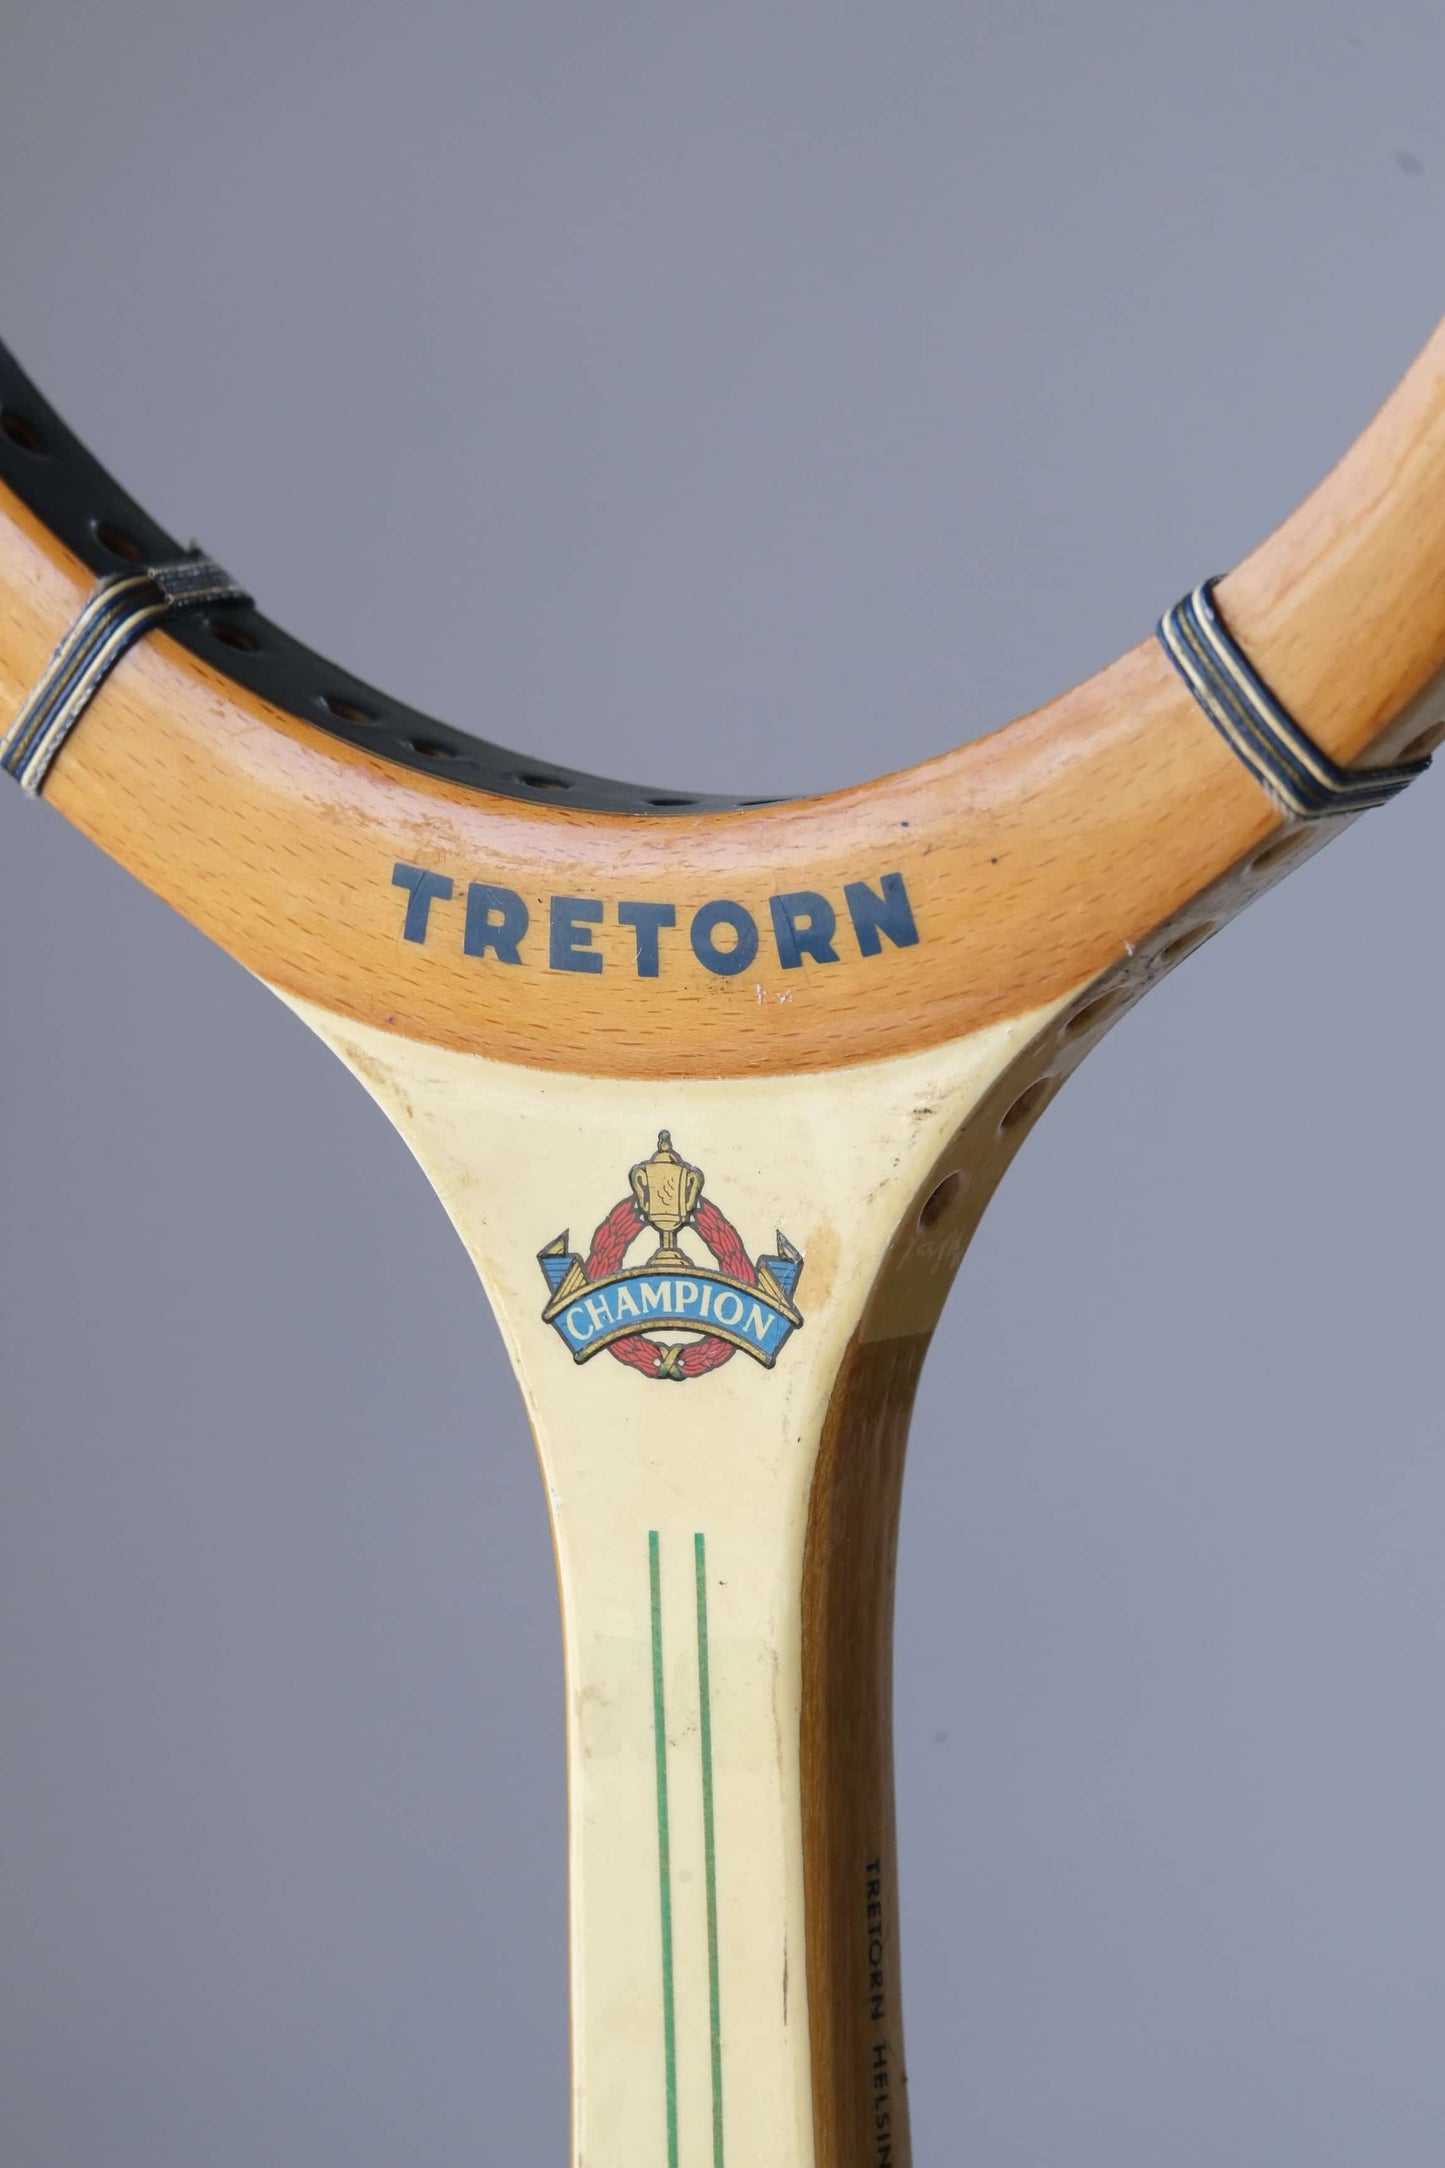 TRETORN Champion Vintage Tennis Racquet throat